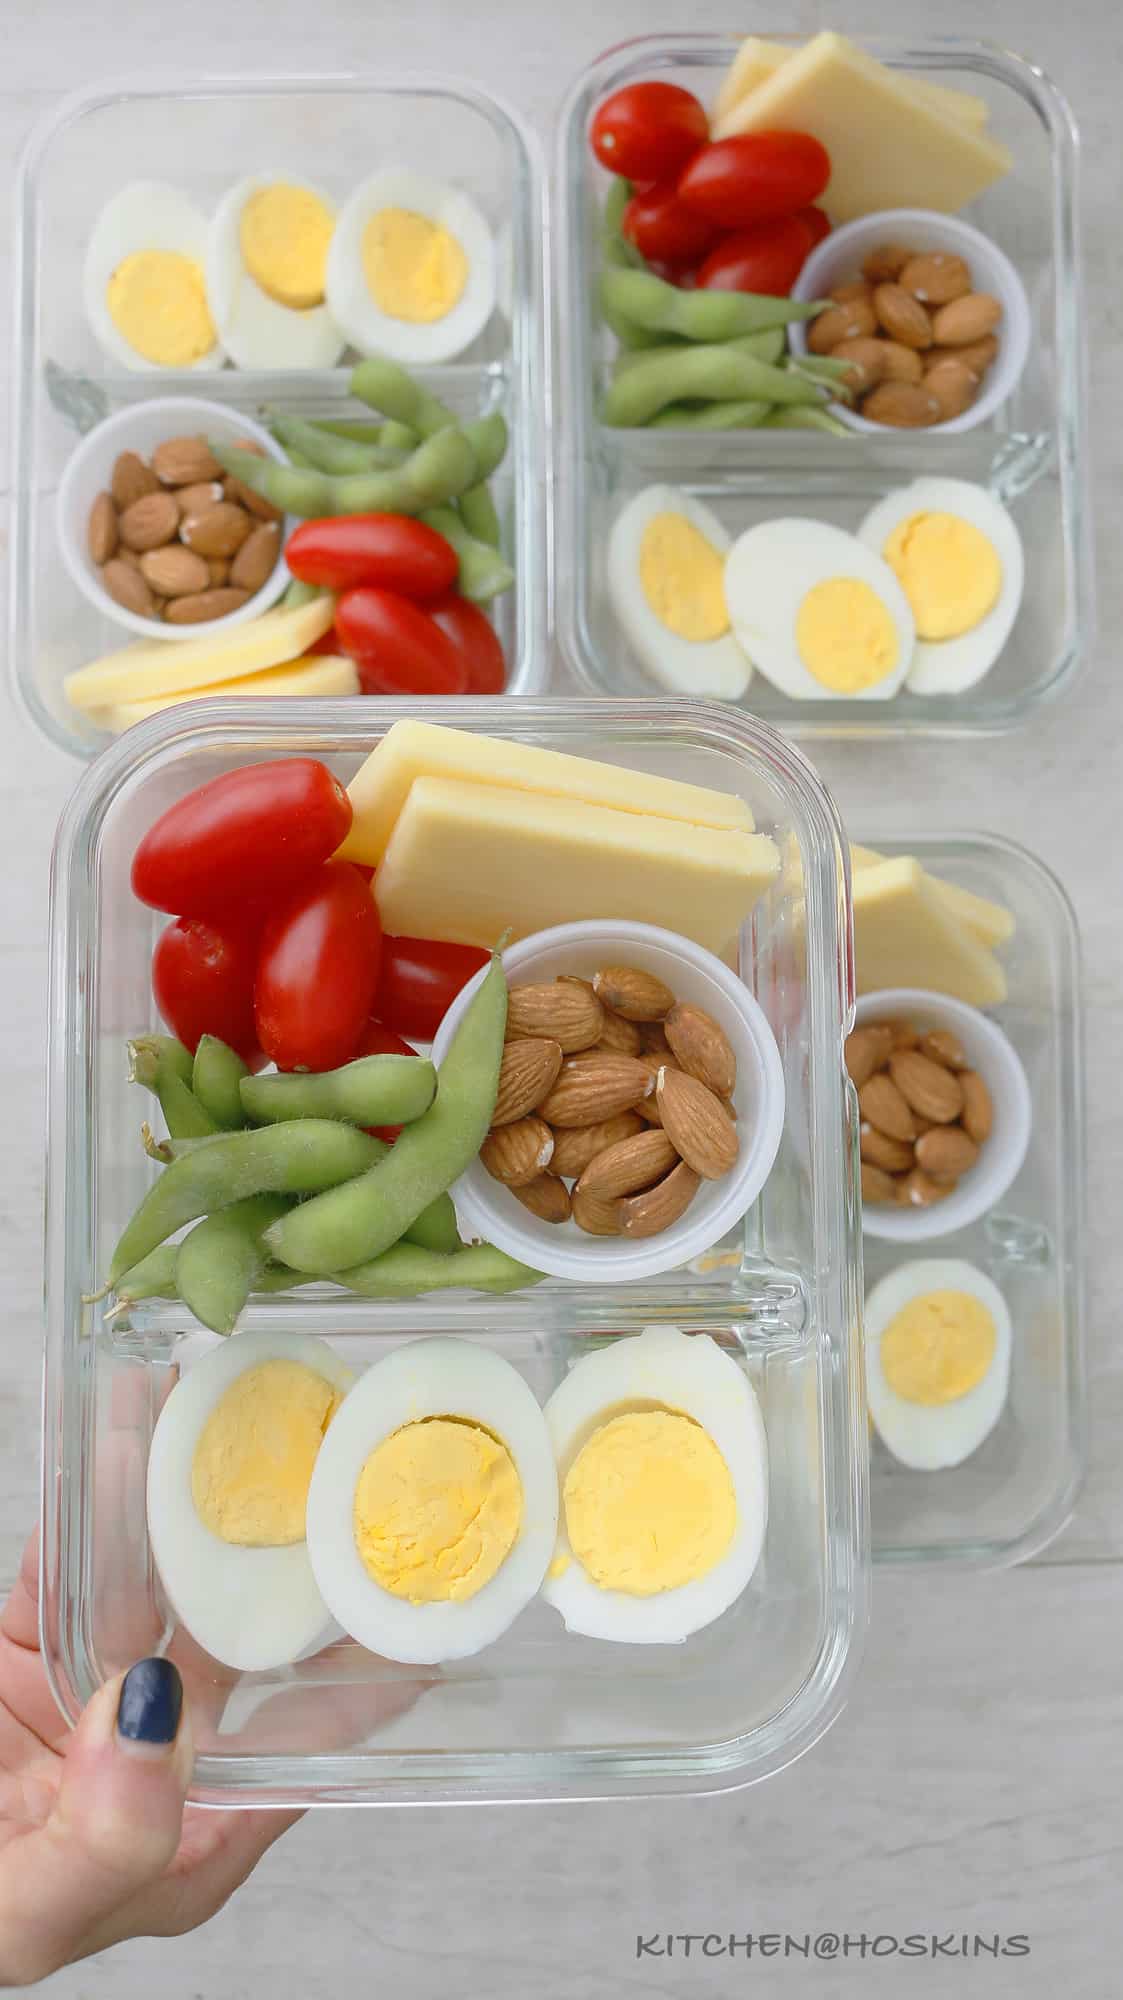 DIY Protein Snack Box Meal Prep